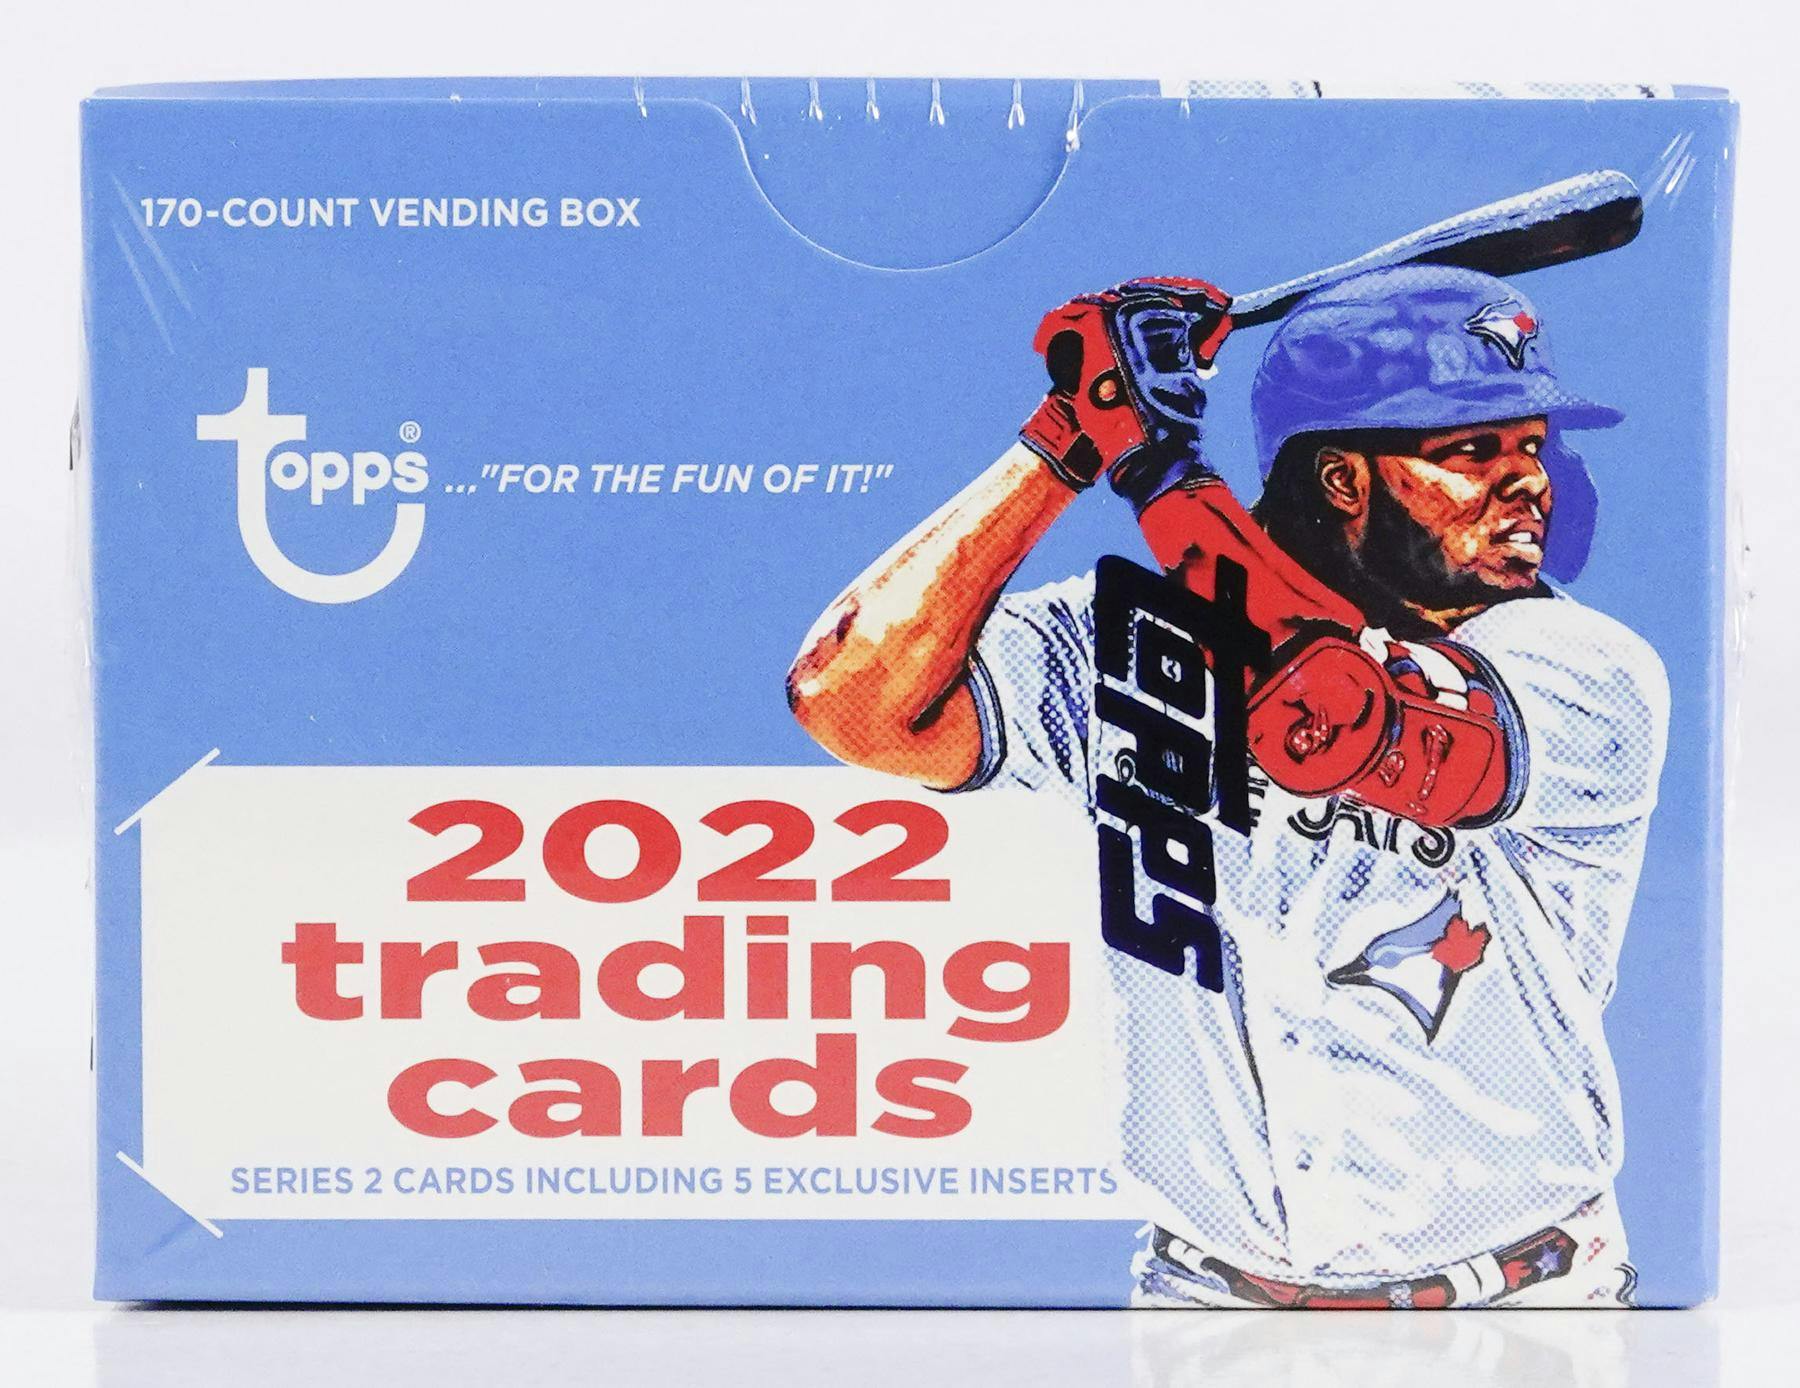 2022 Topps Series 1 Baseball Checklist, Set Details, Buy Boxes